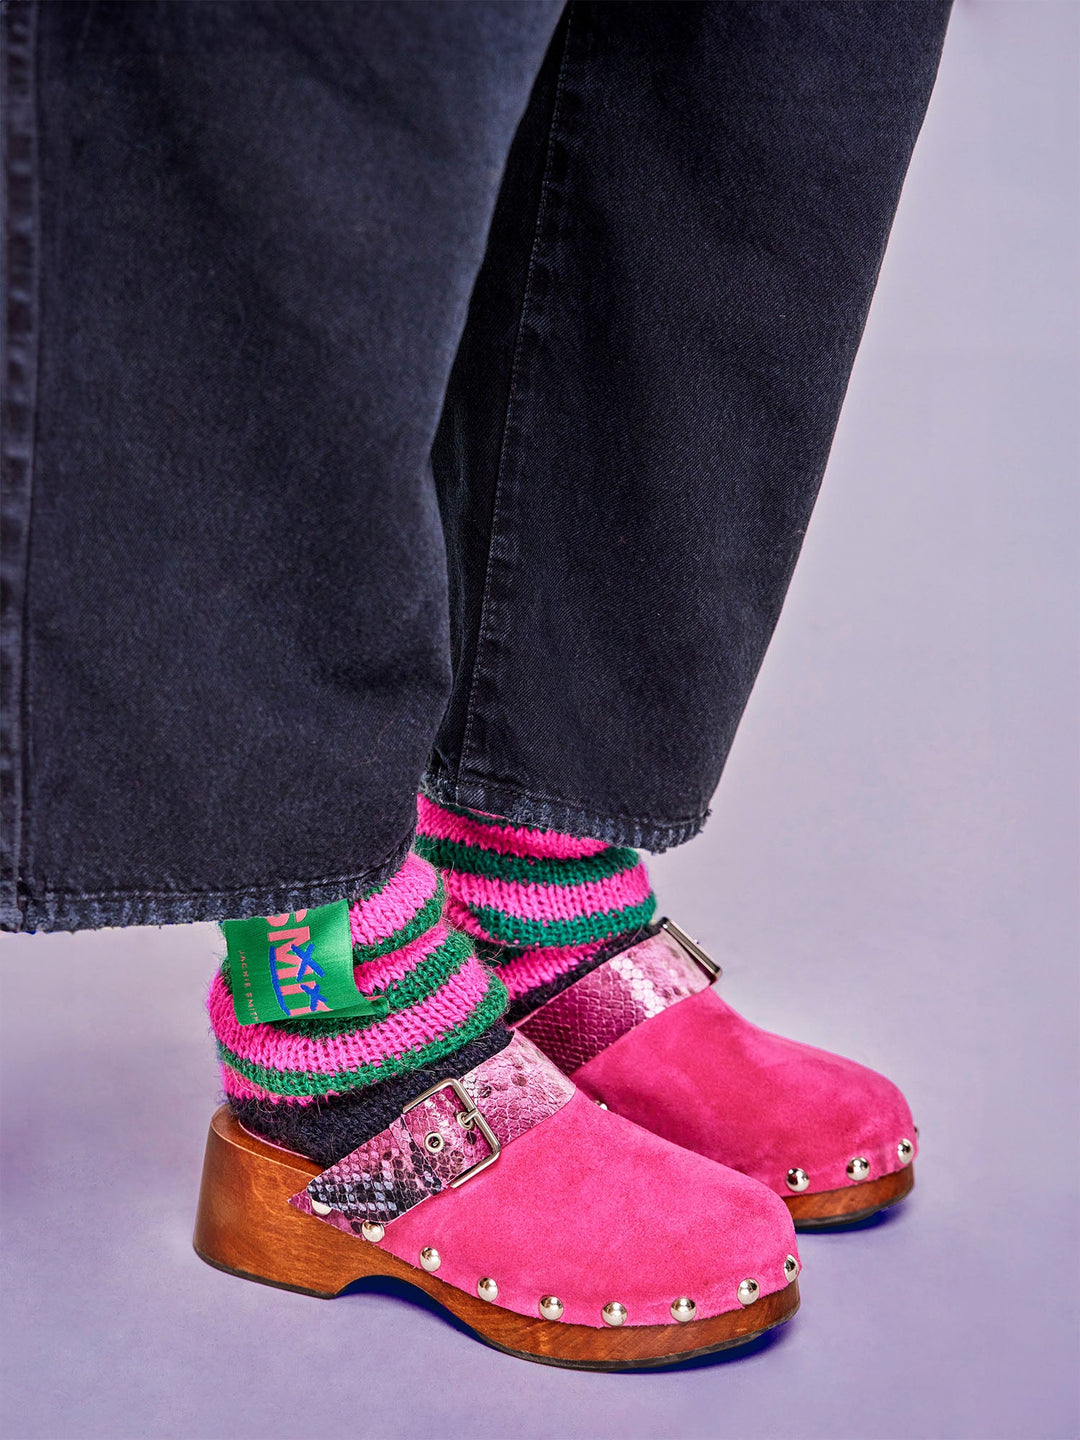 Carnavalito Hand Knitted Socks